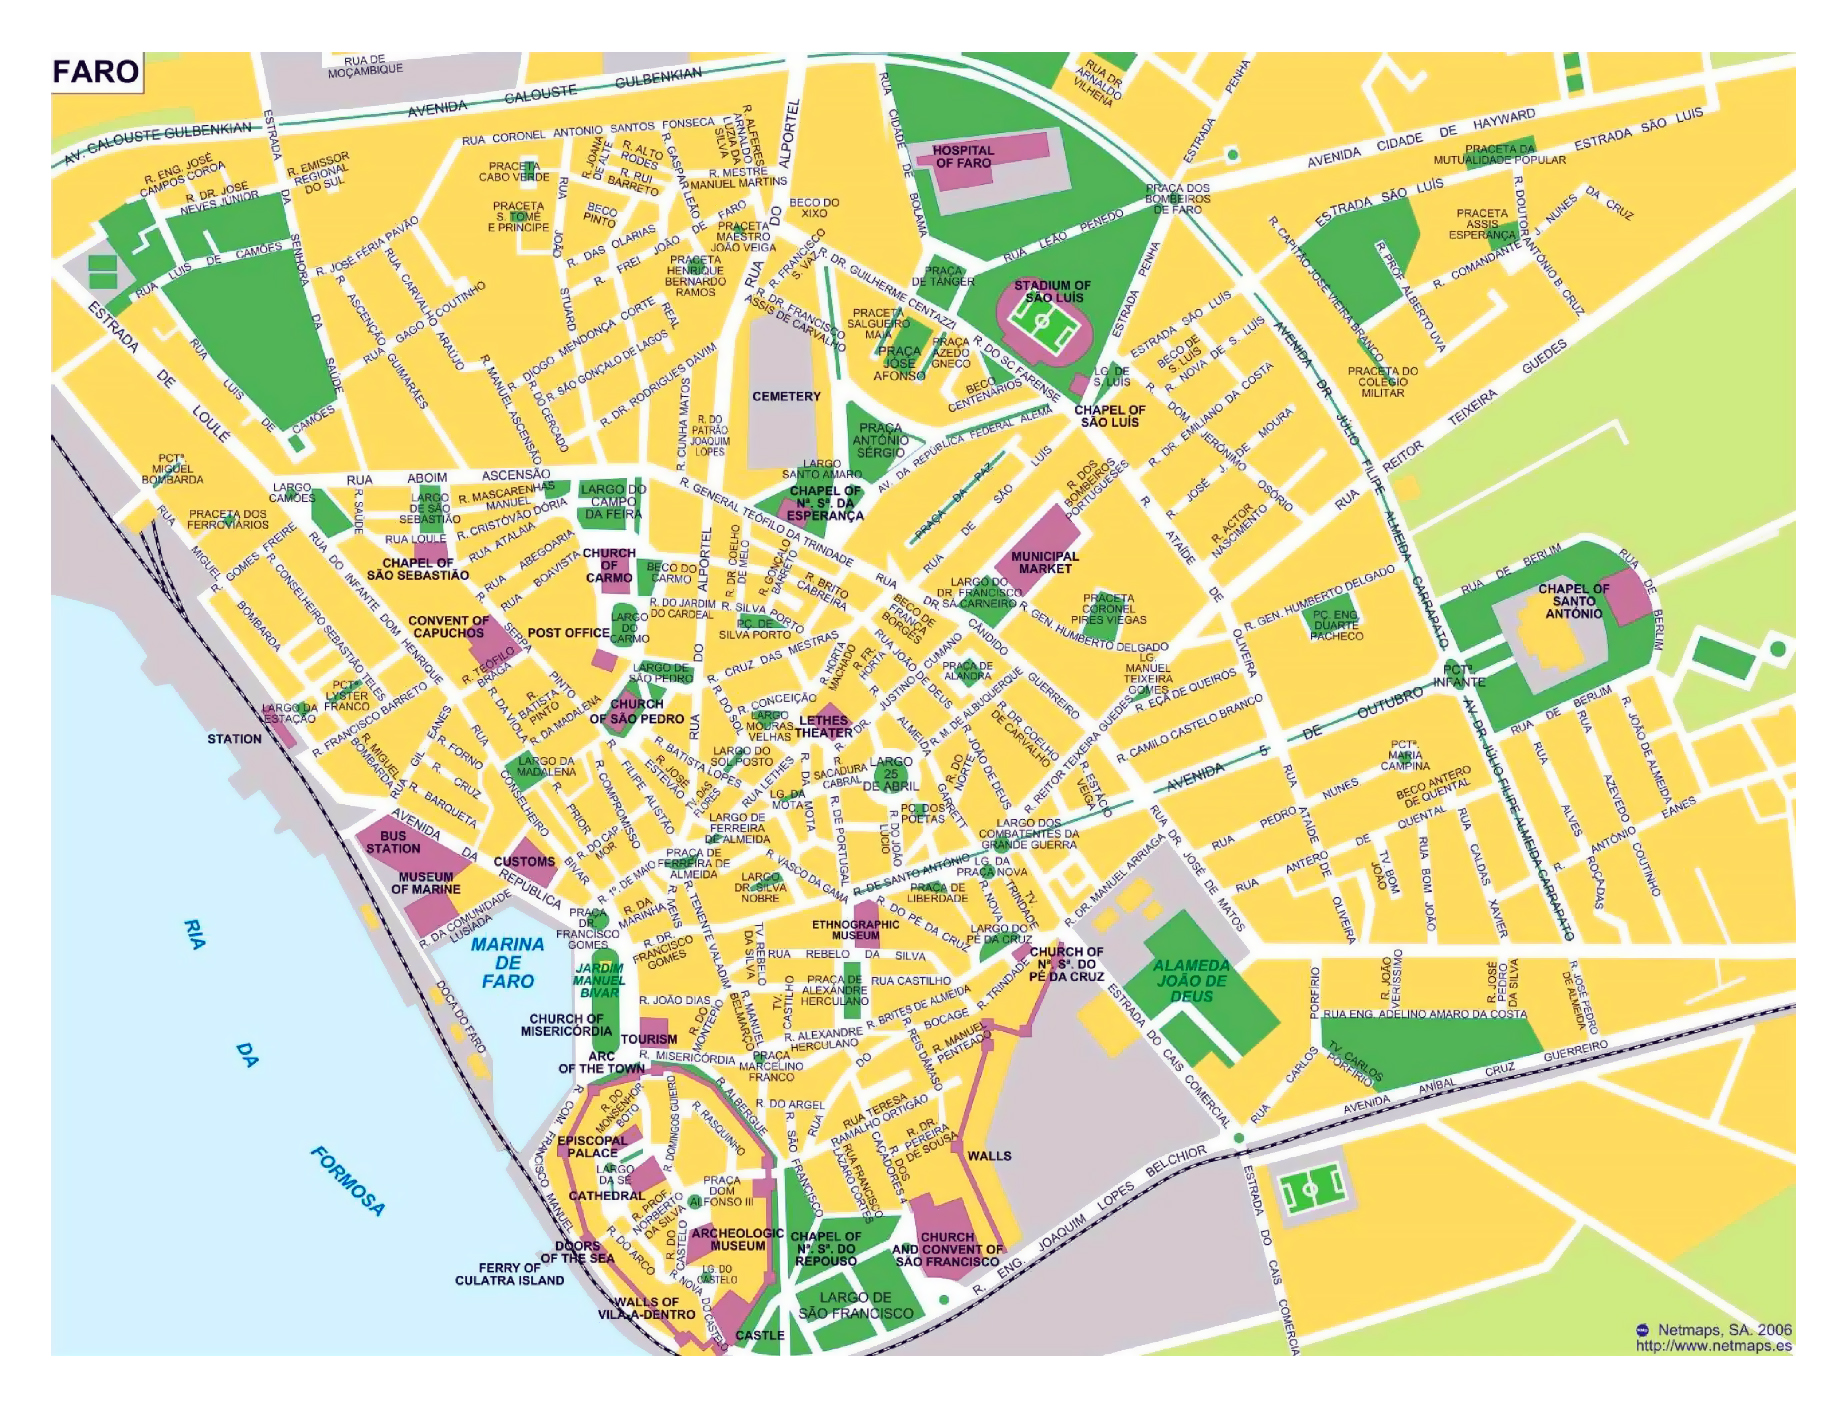 Large tourist map of Faro | Faro | Portugal | Europe | Mapsland | Maps